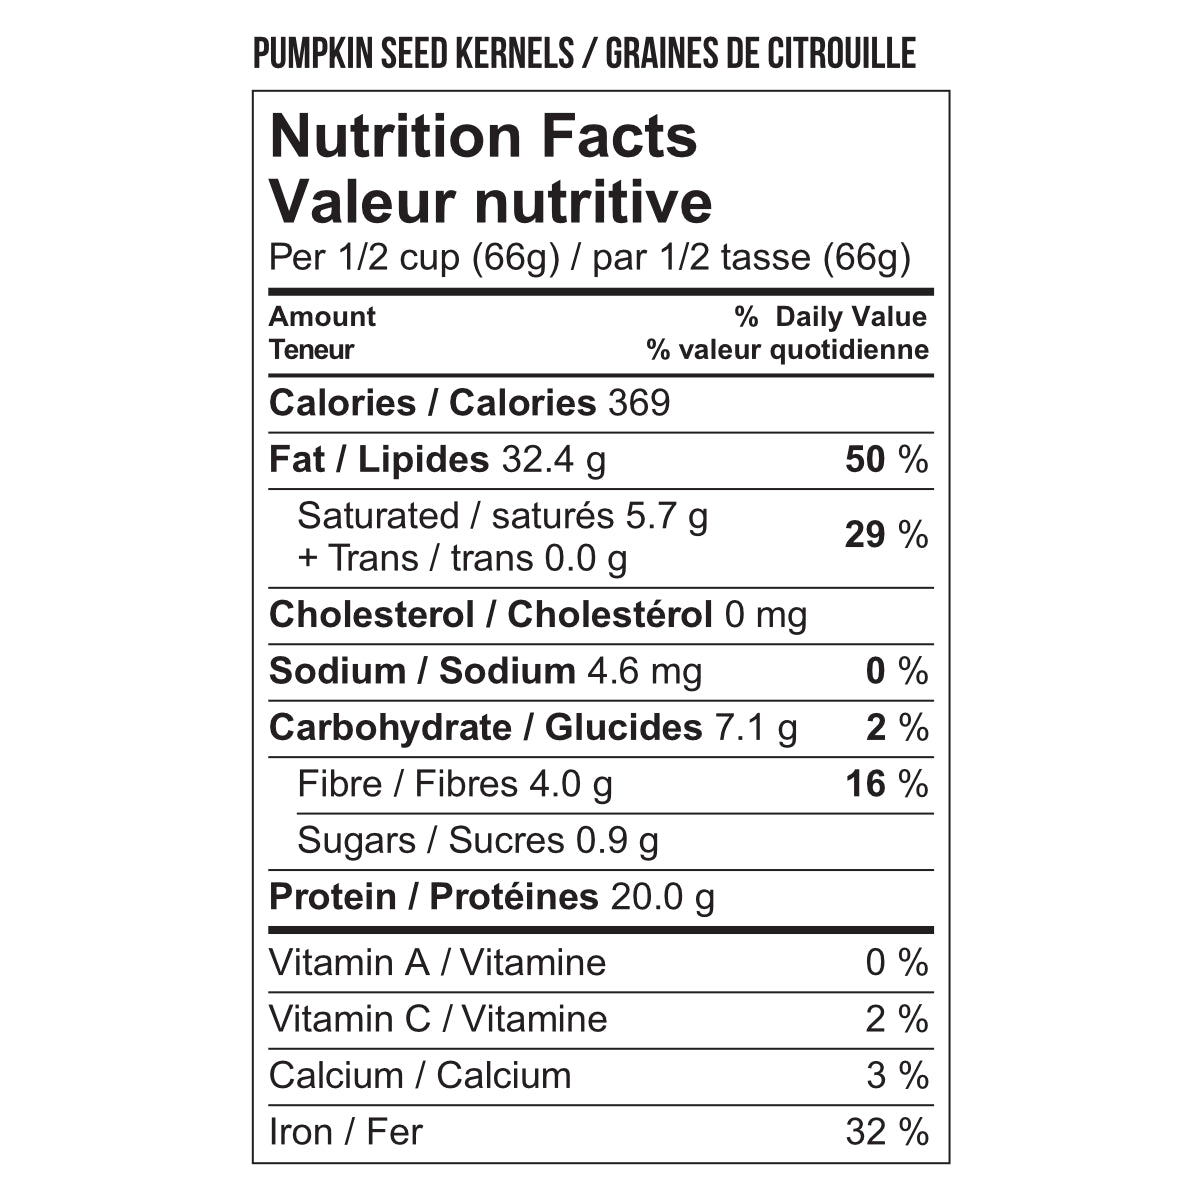 Nutritional information for Newtons No Gluten pumpkin seed kernels